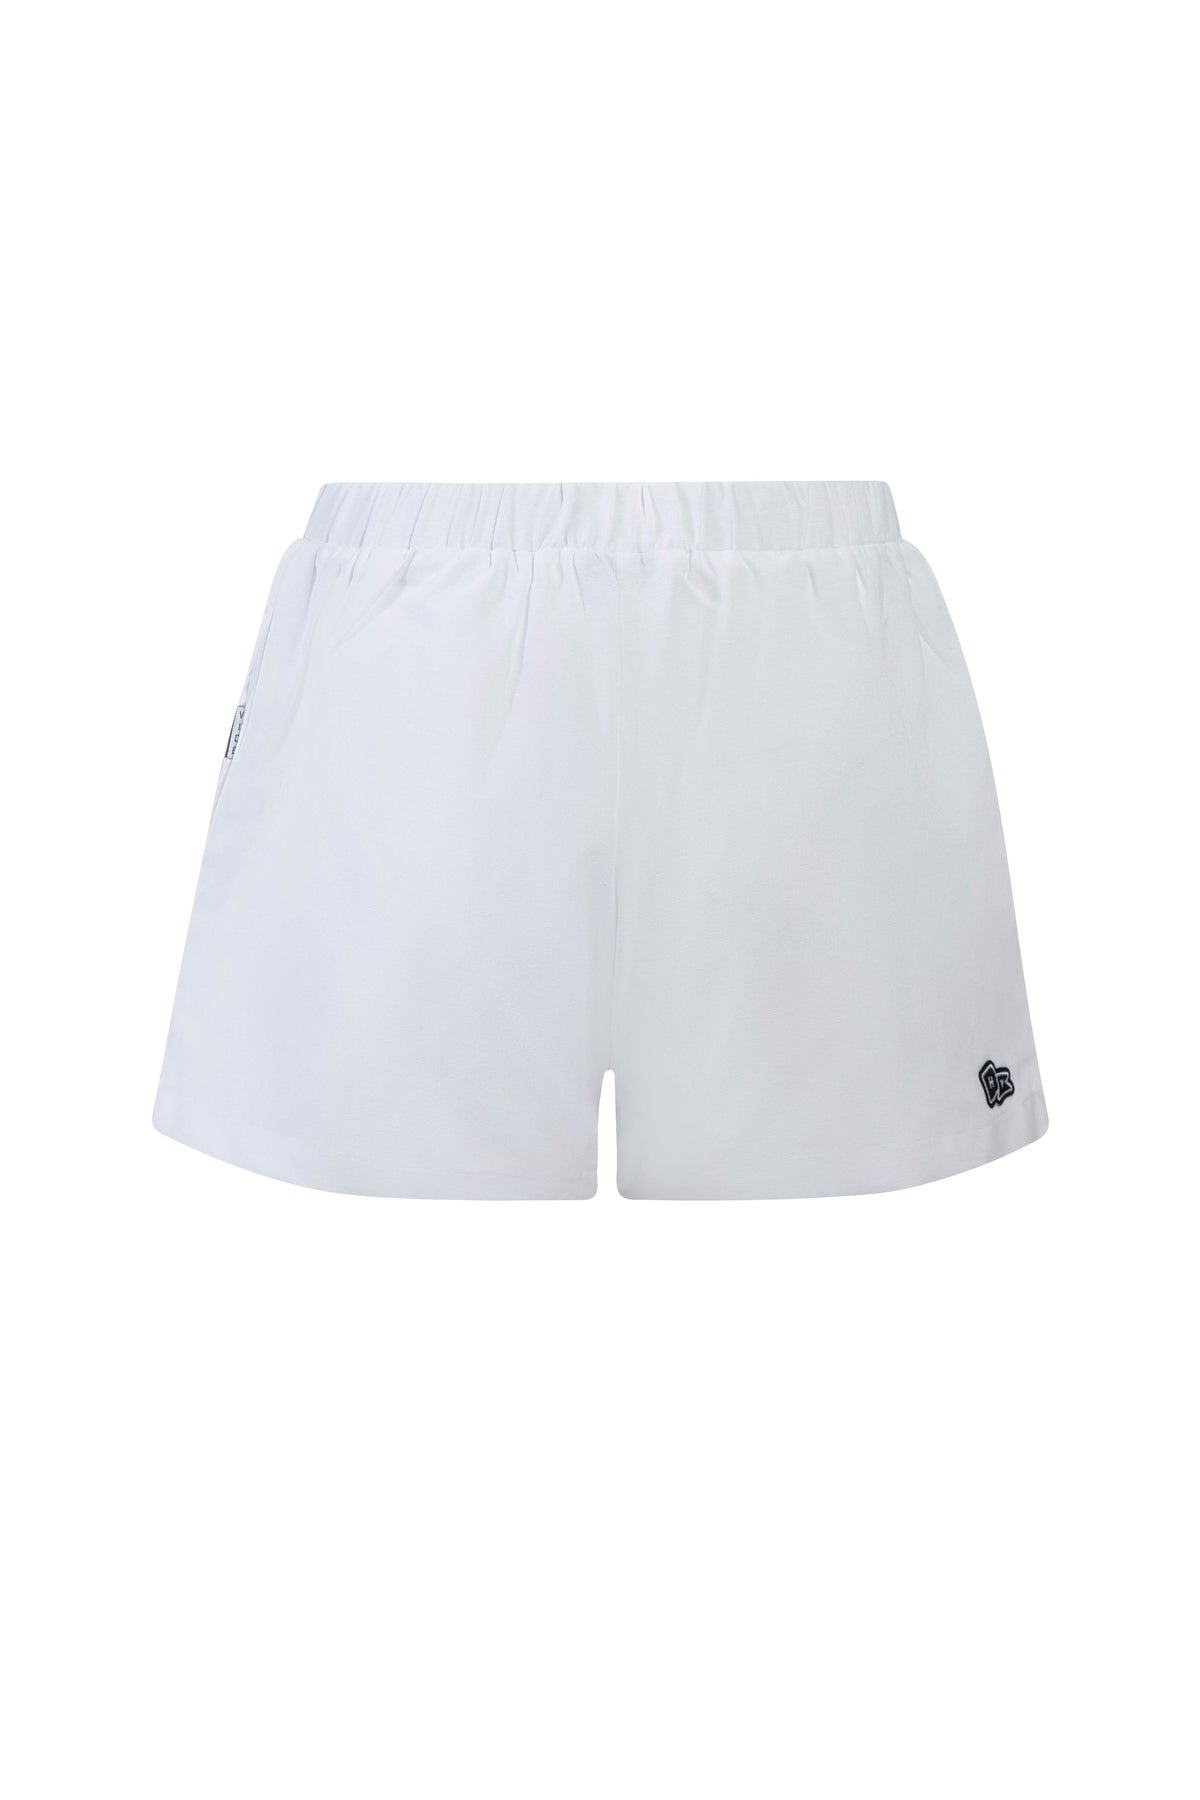 D.C. United Hamptons Shorts